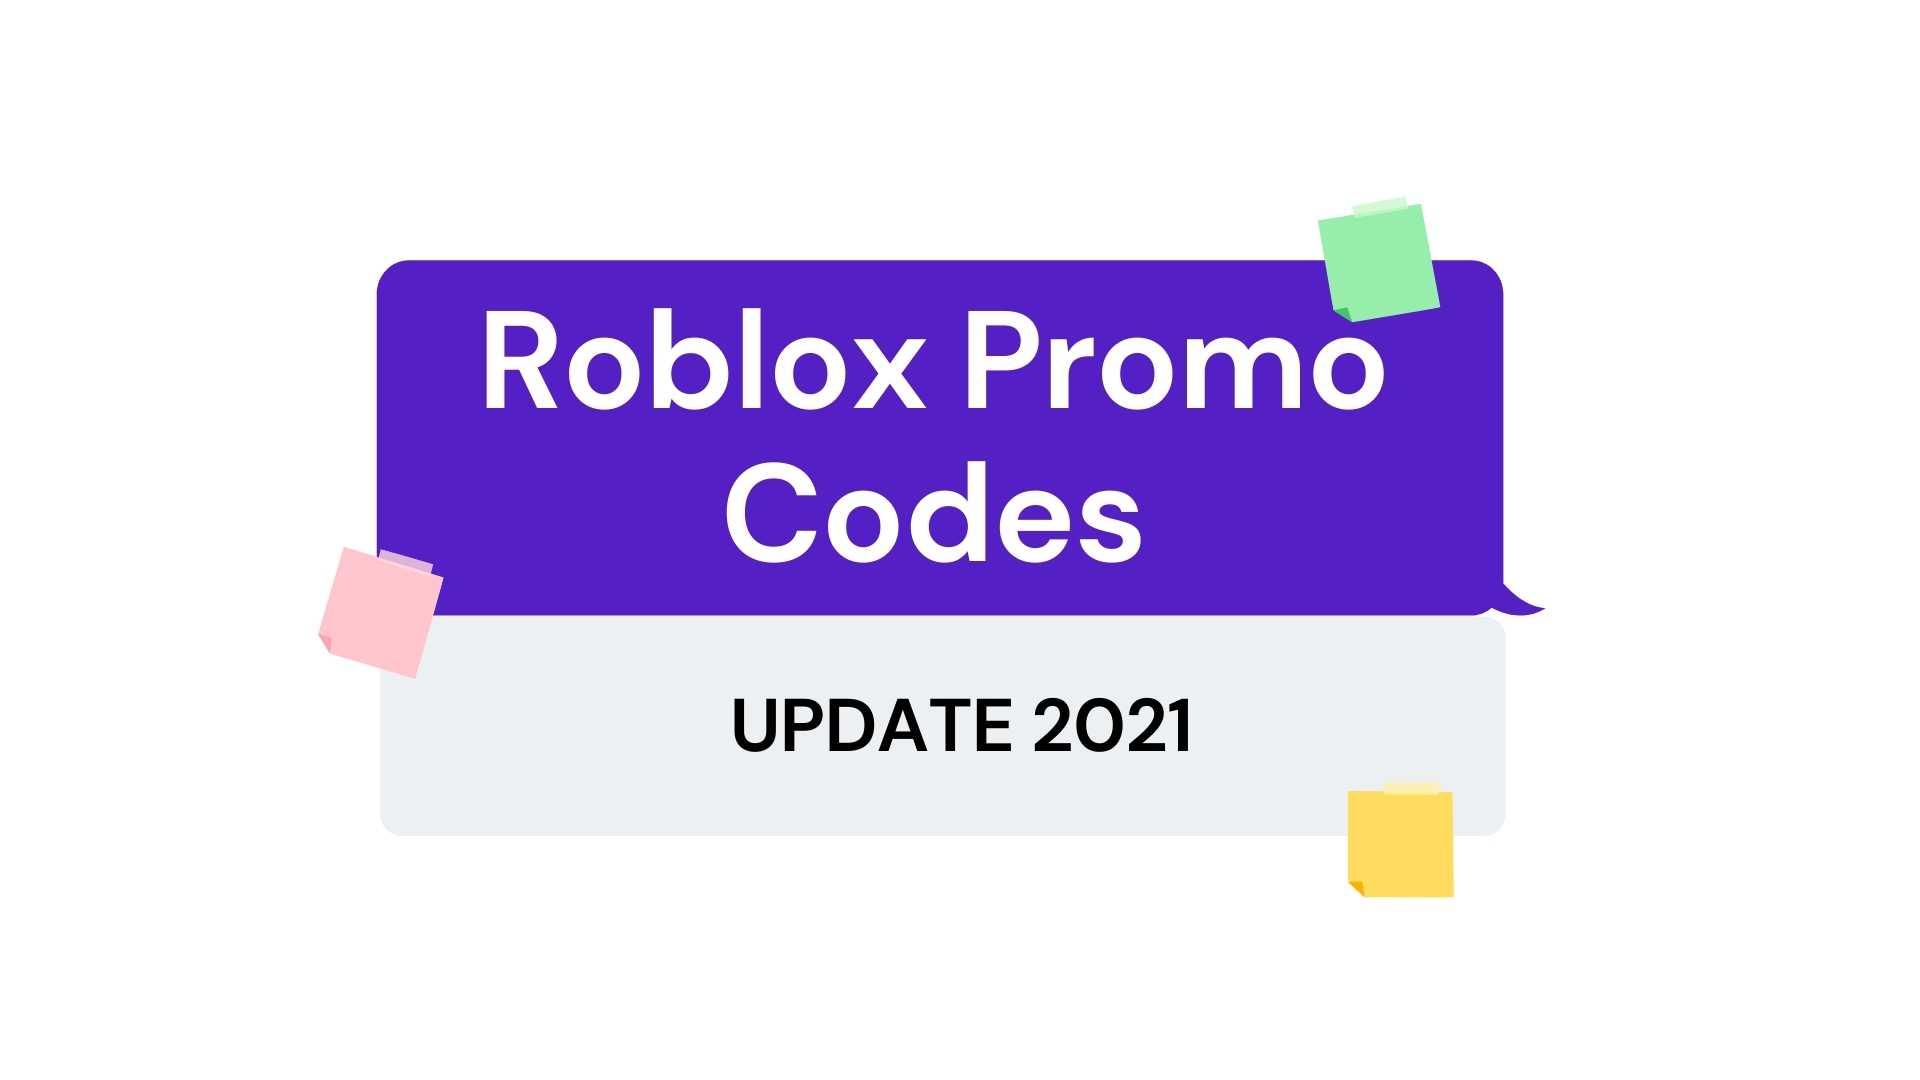 Roblox Promo Codes Discount Codes Full List June 2021 Salusdigital - roblox promo codes complete list